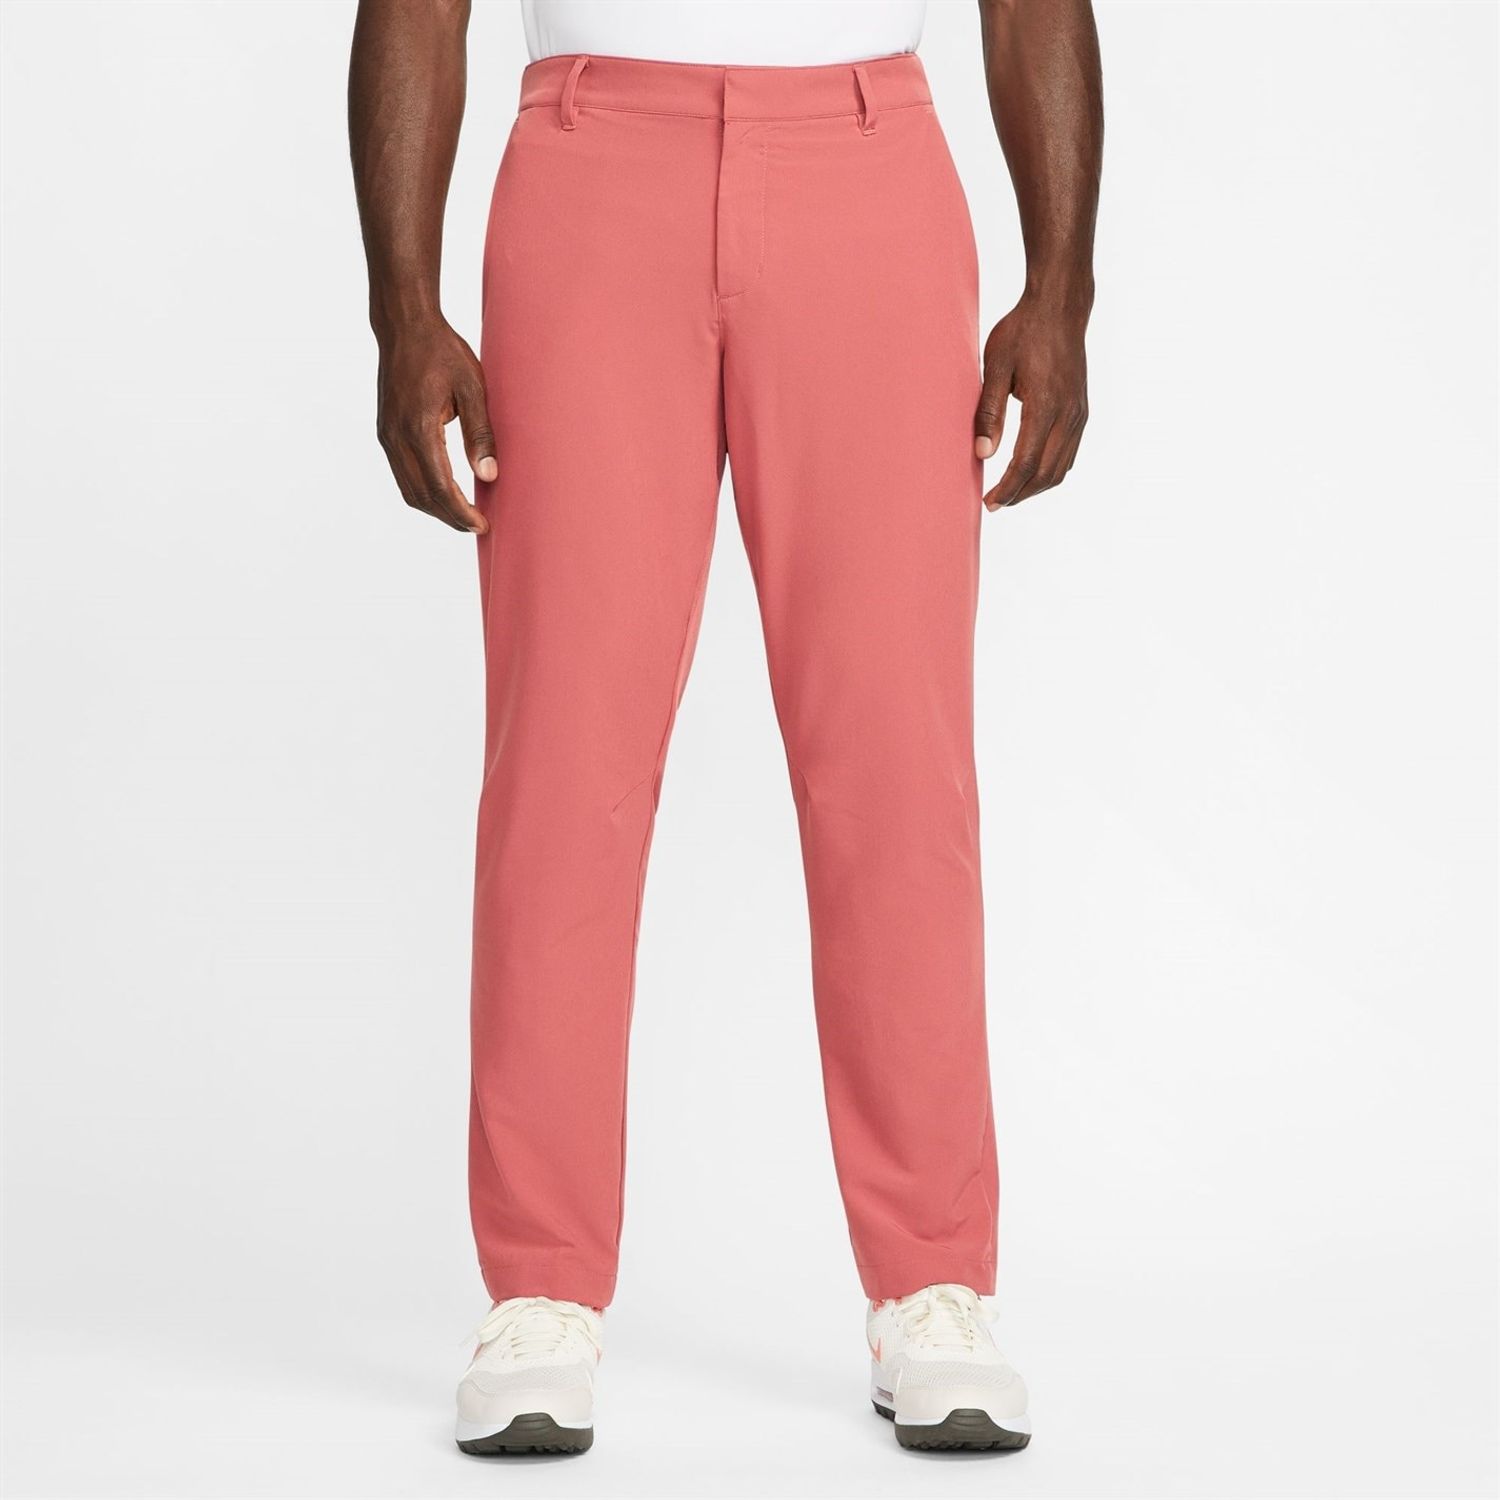 Pink Nike Dri FIT Vapor Mens Slim Fit Golf Pants - Get The Label